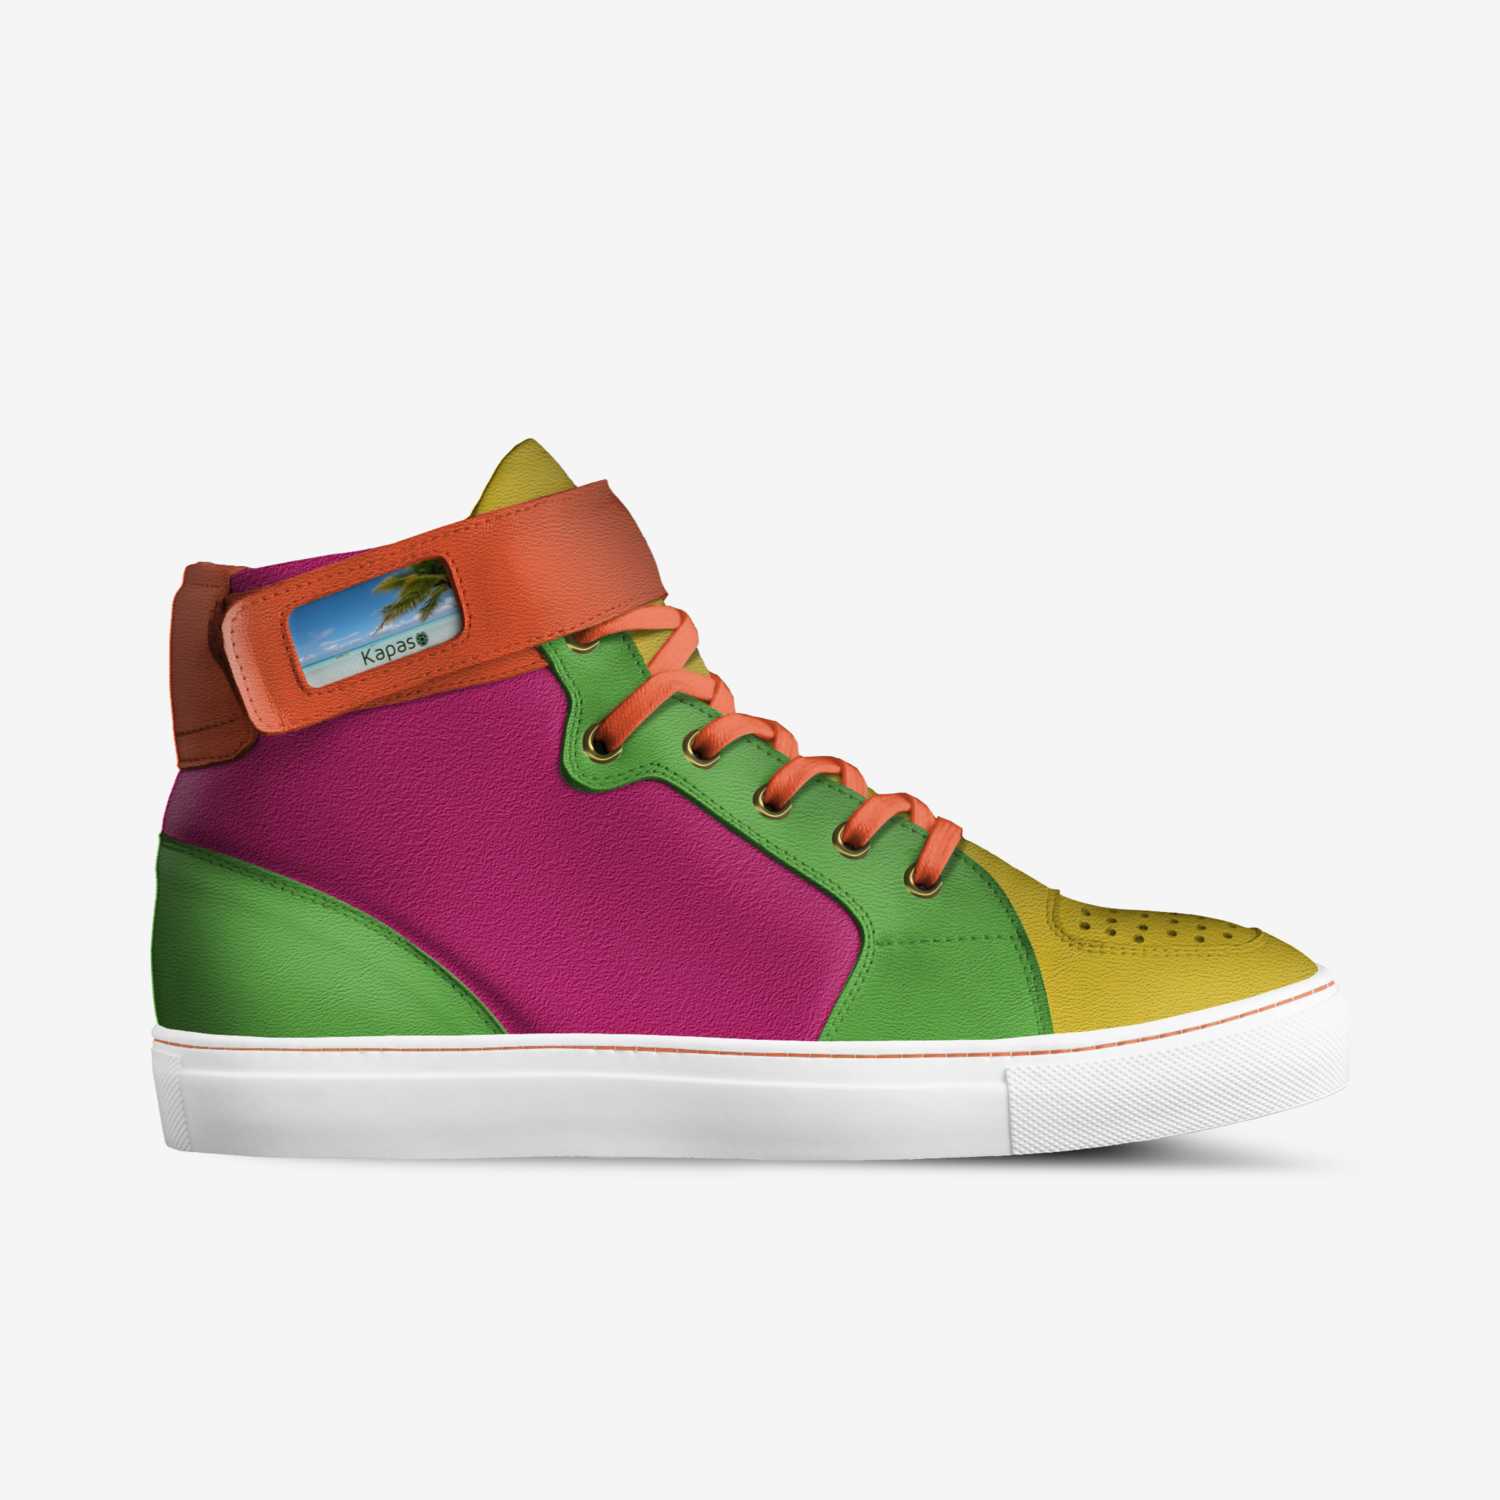 Kapas | A Custom Shoe concept by Sanja Ruzic